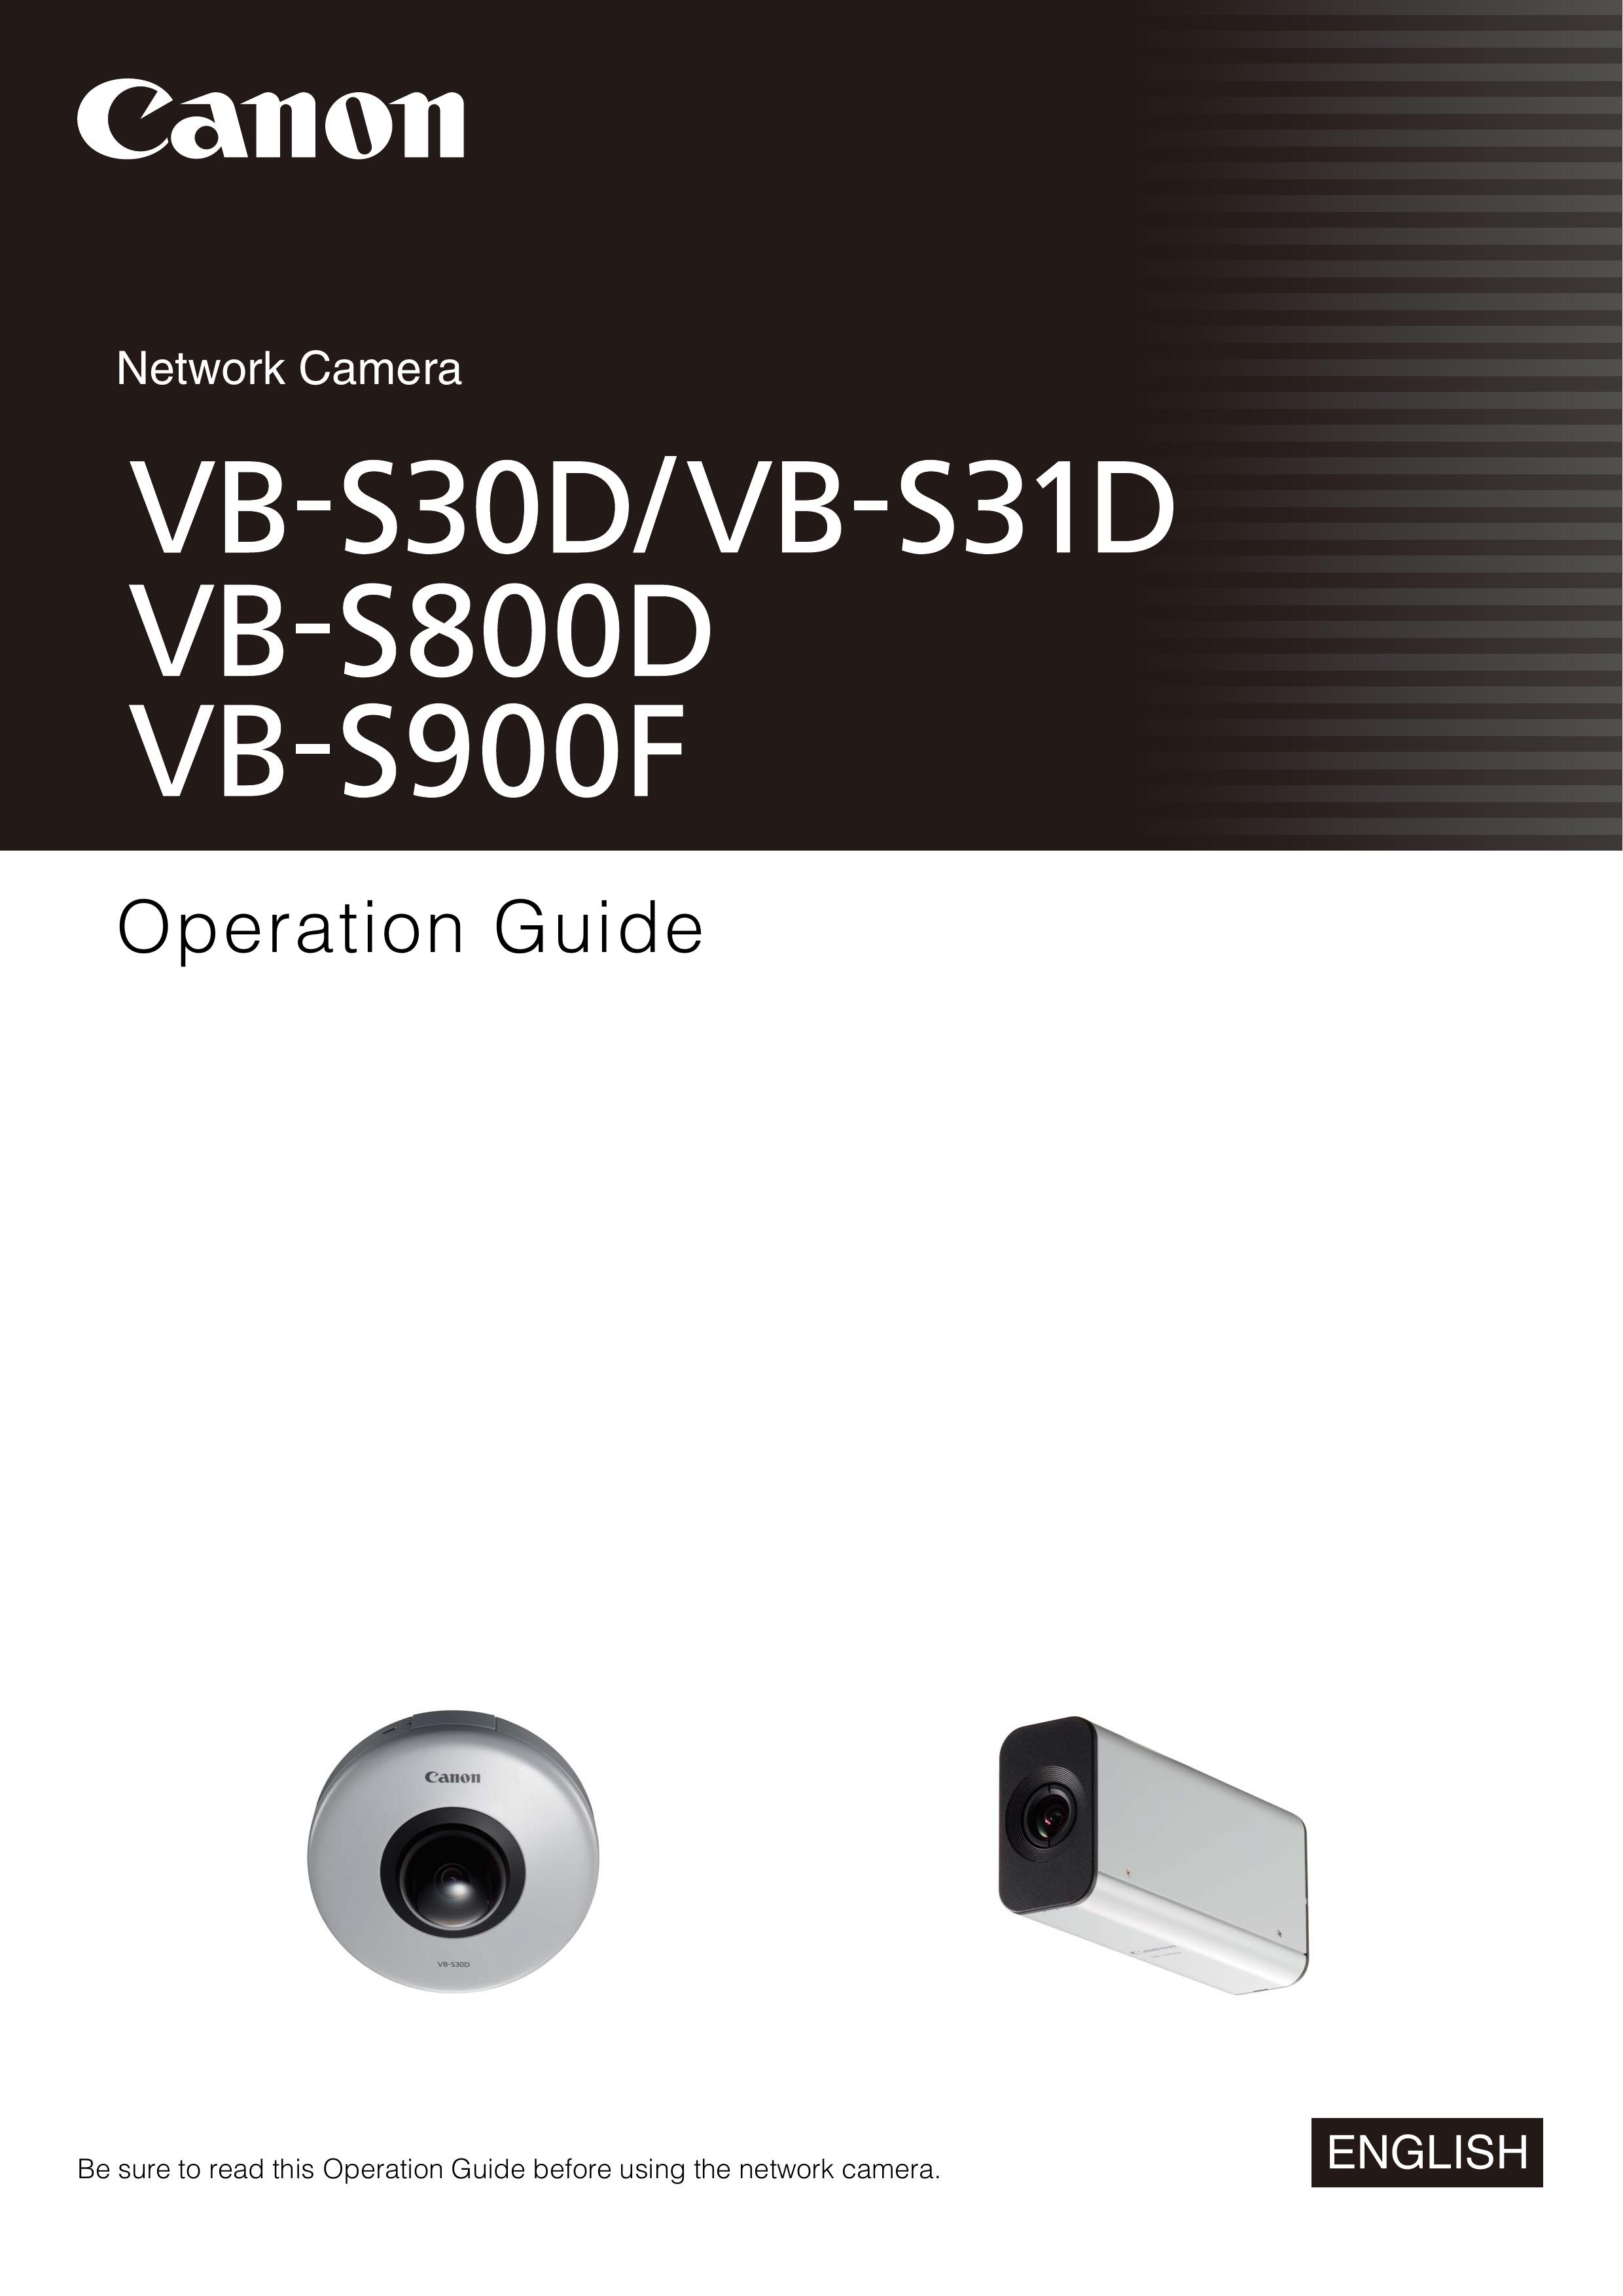 Canon vb-s31D Security Camera User Manual